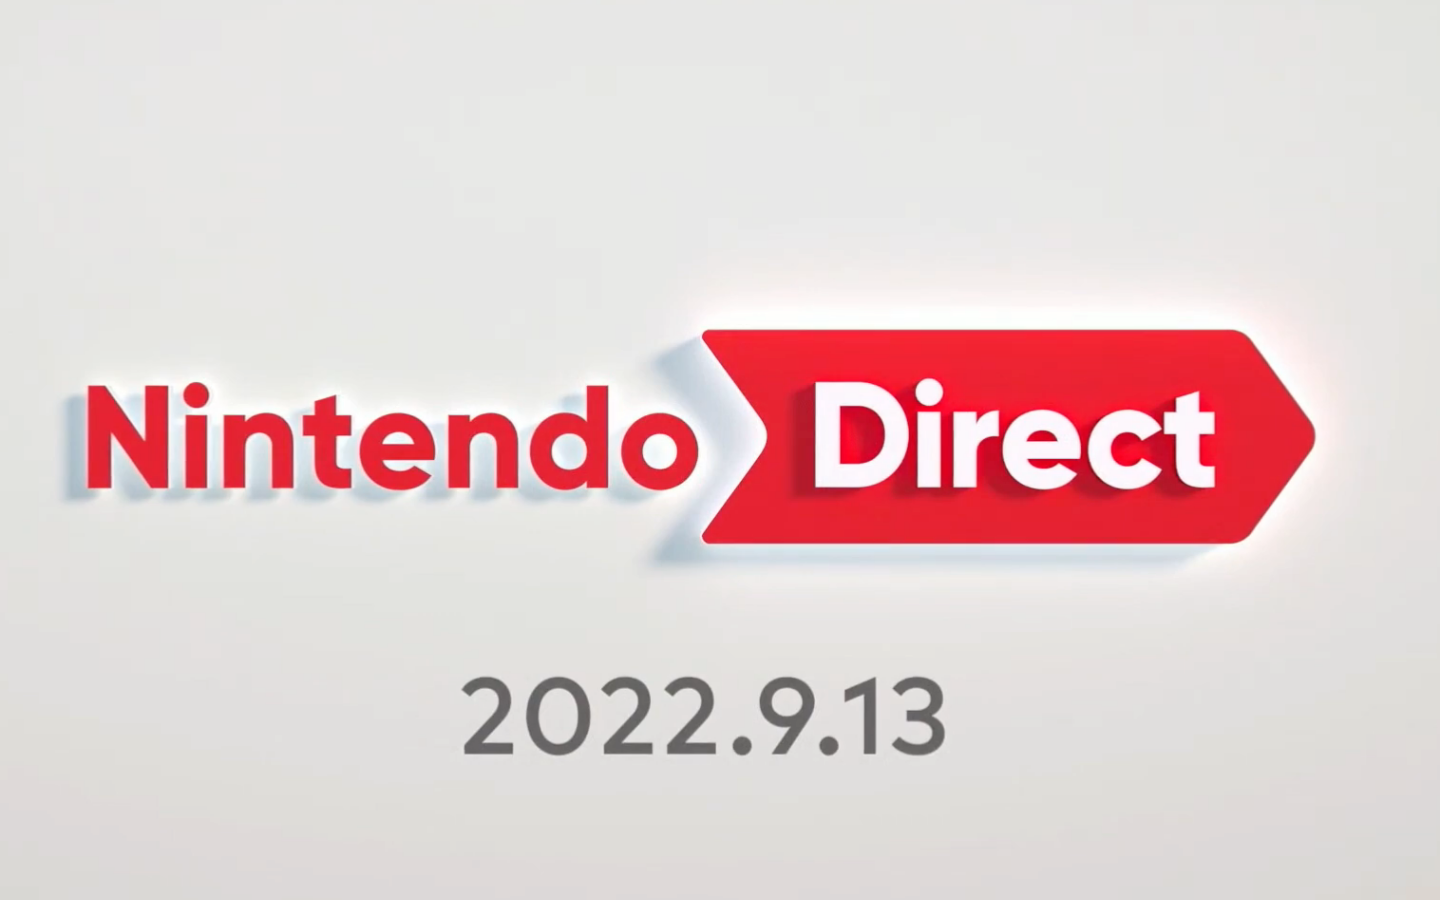 Nintendo Direct 2022 發表！《薩爾達傳說》續作、《皮克敏 4》、《牧場物語》、《歧路旅人 2》、《交響傳奇》等話題作品都將登場